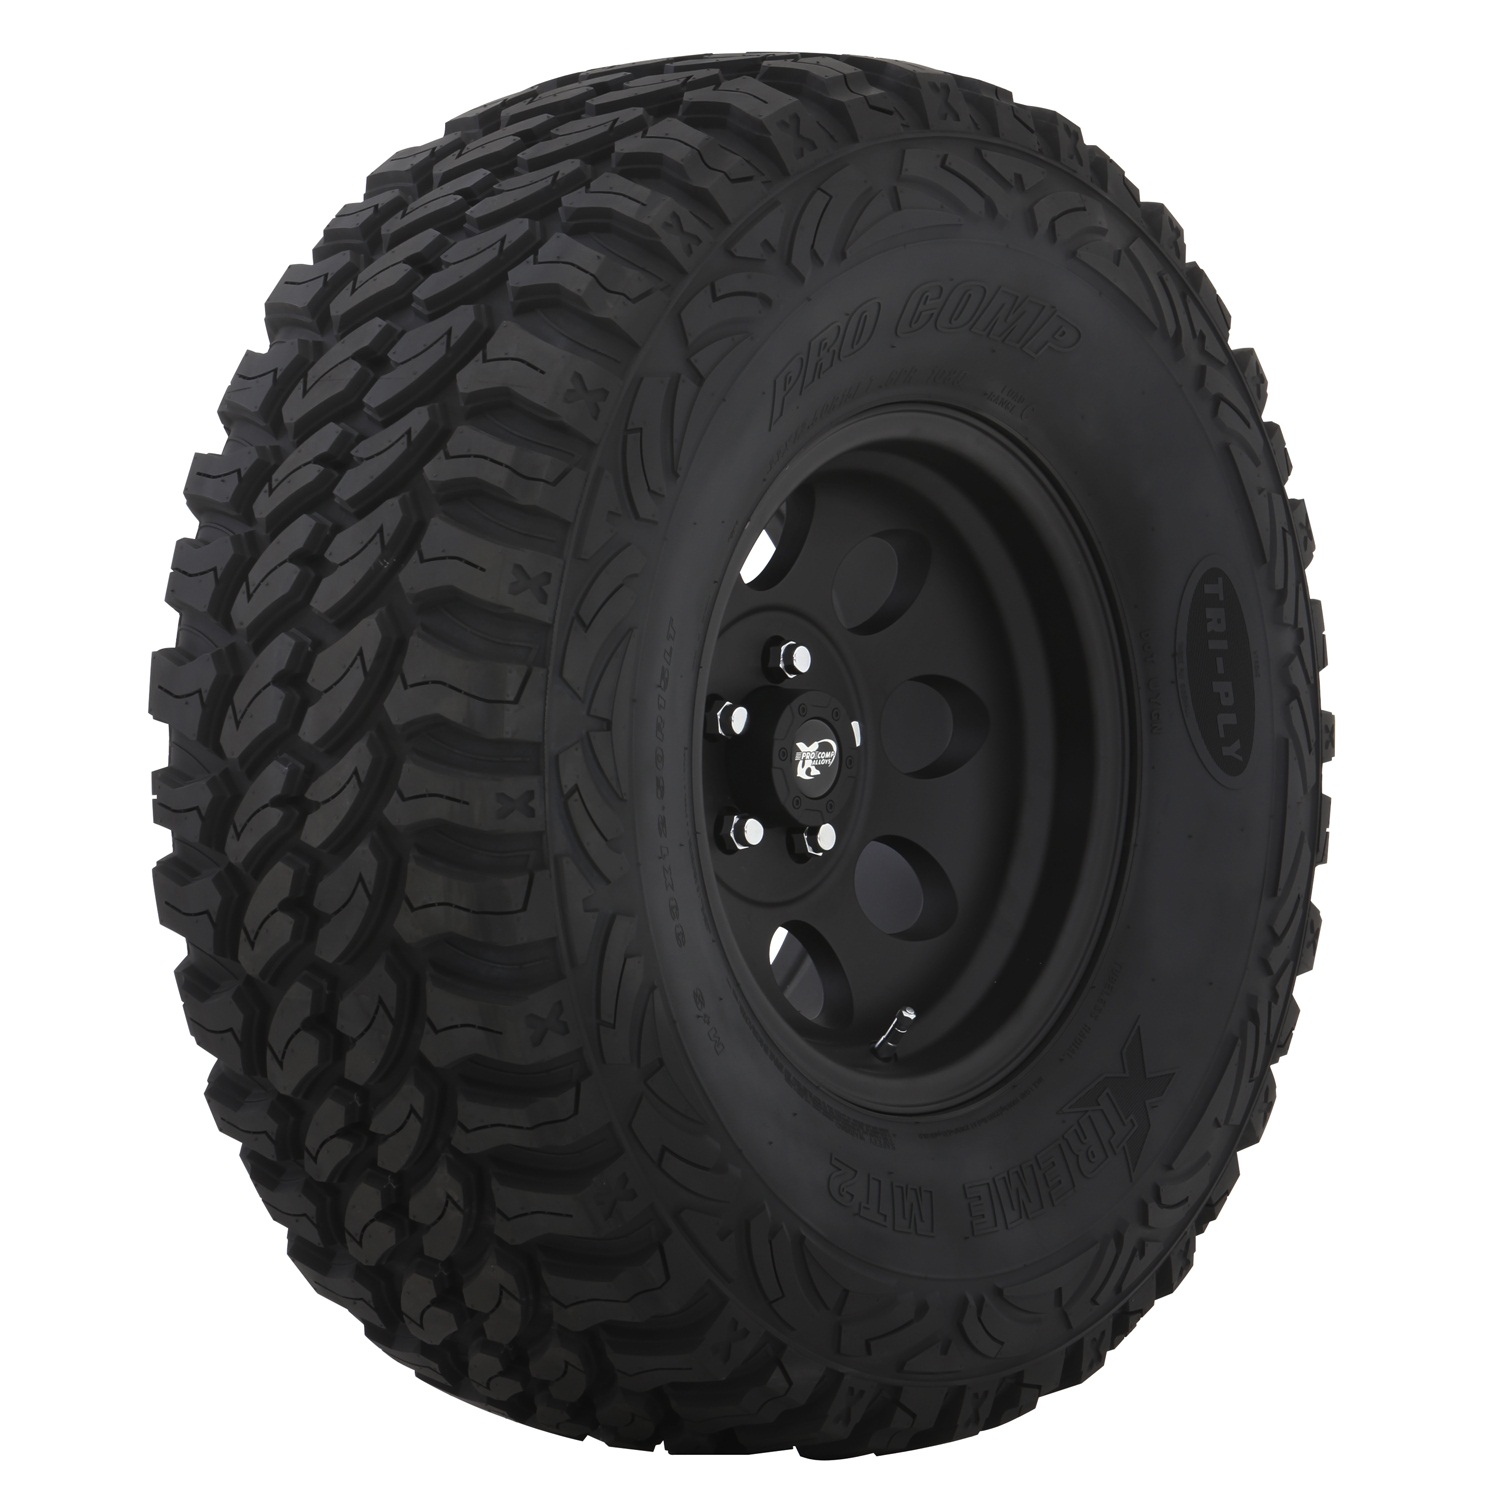 Pro Comp Tires Pro Comp Tires 701295 Pro Comp Xtreme Mud Terrain 2; Tire